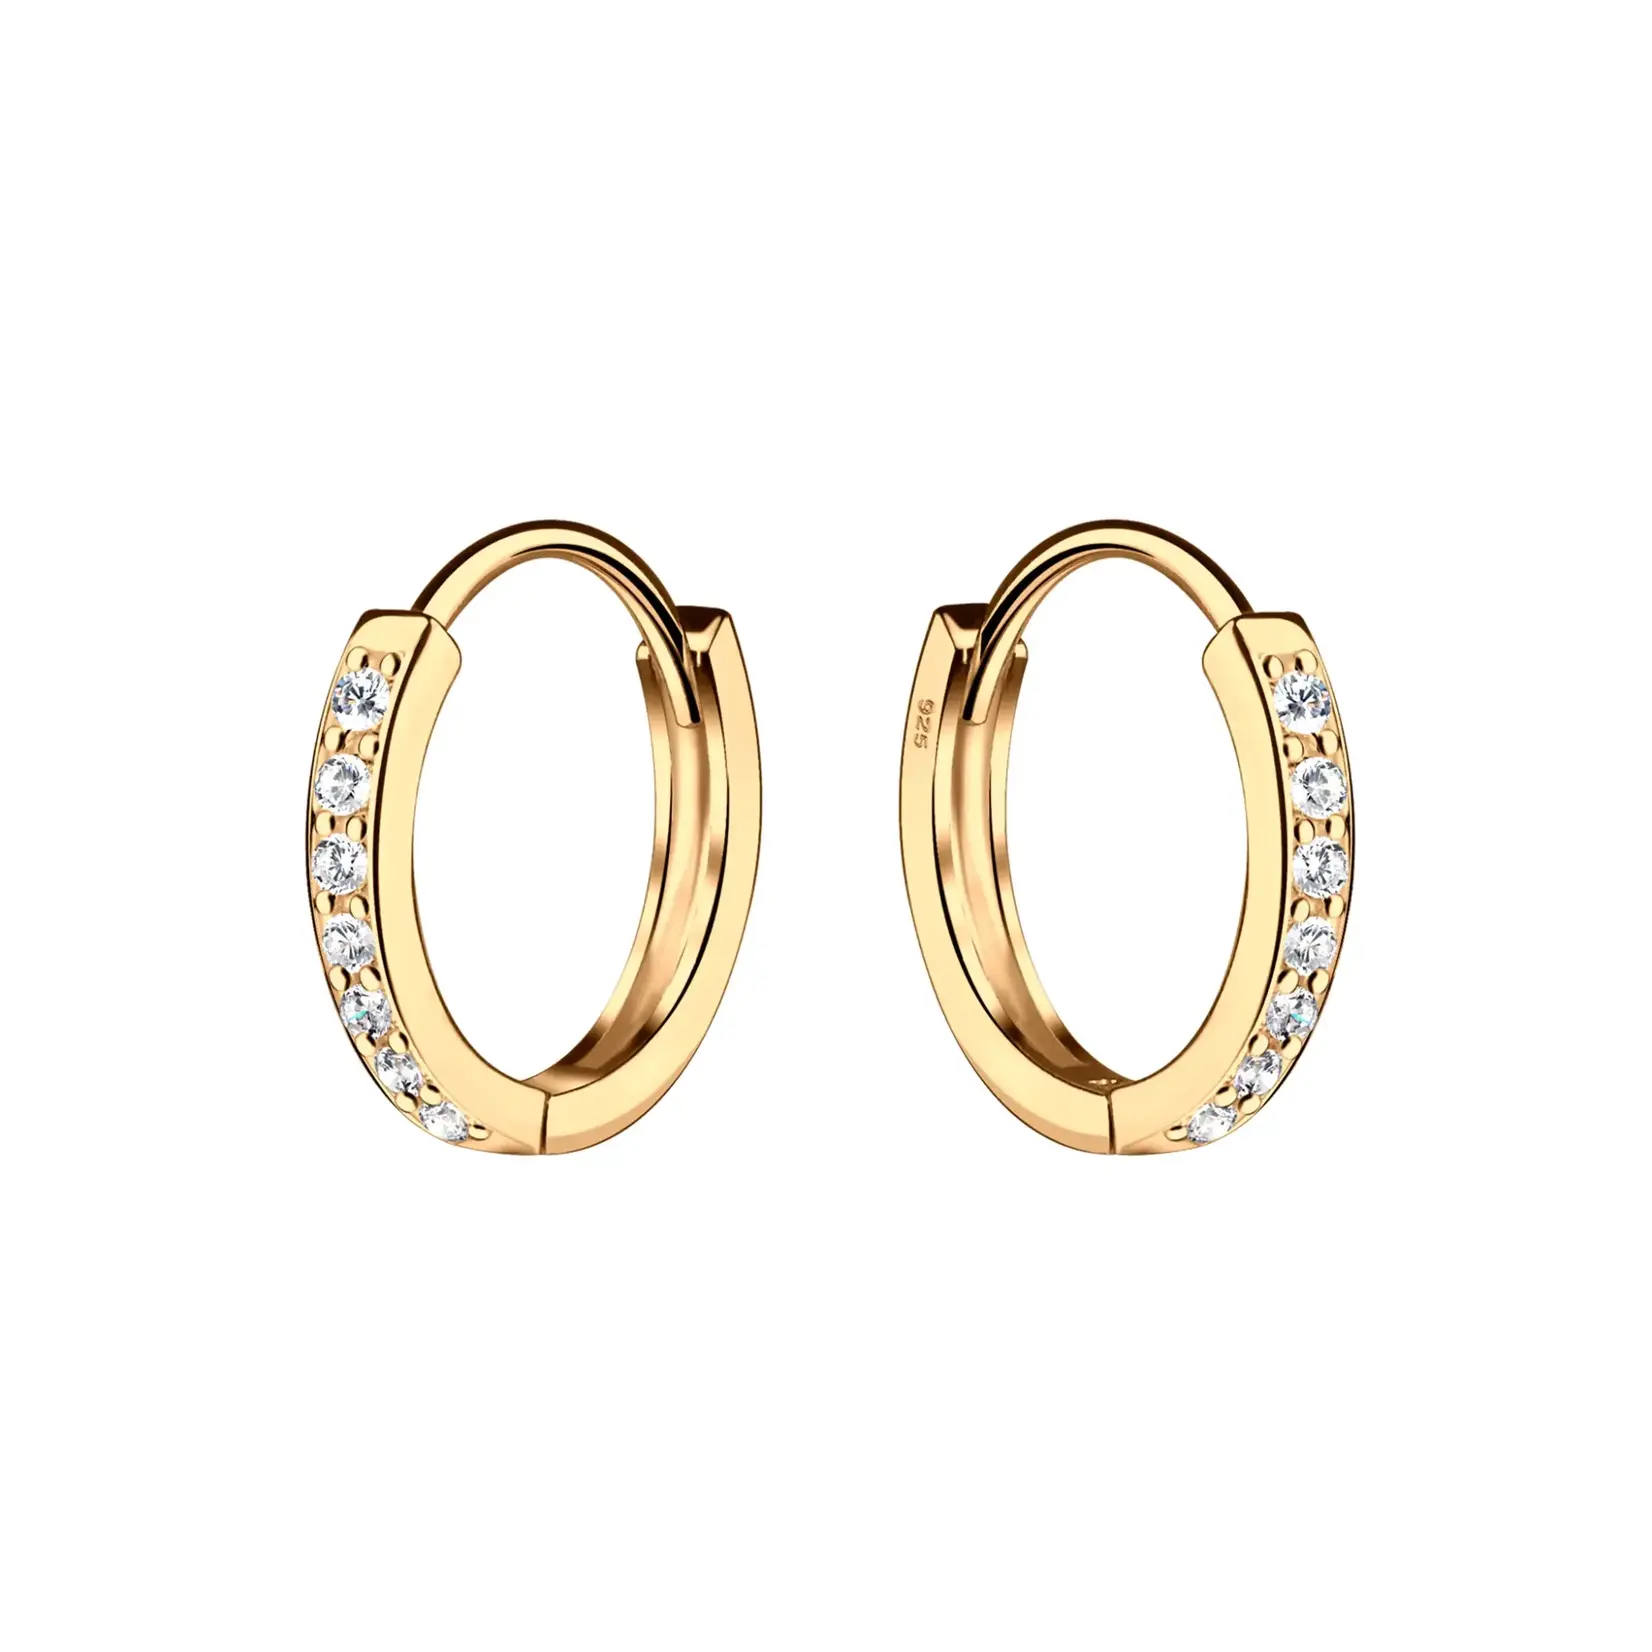 14K Gold-Plated Huggie Hoop Earrings with CZs